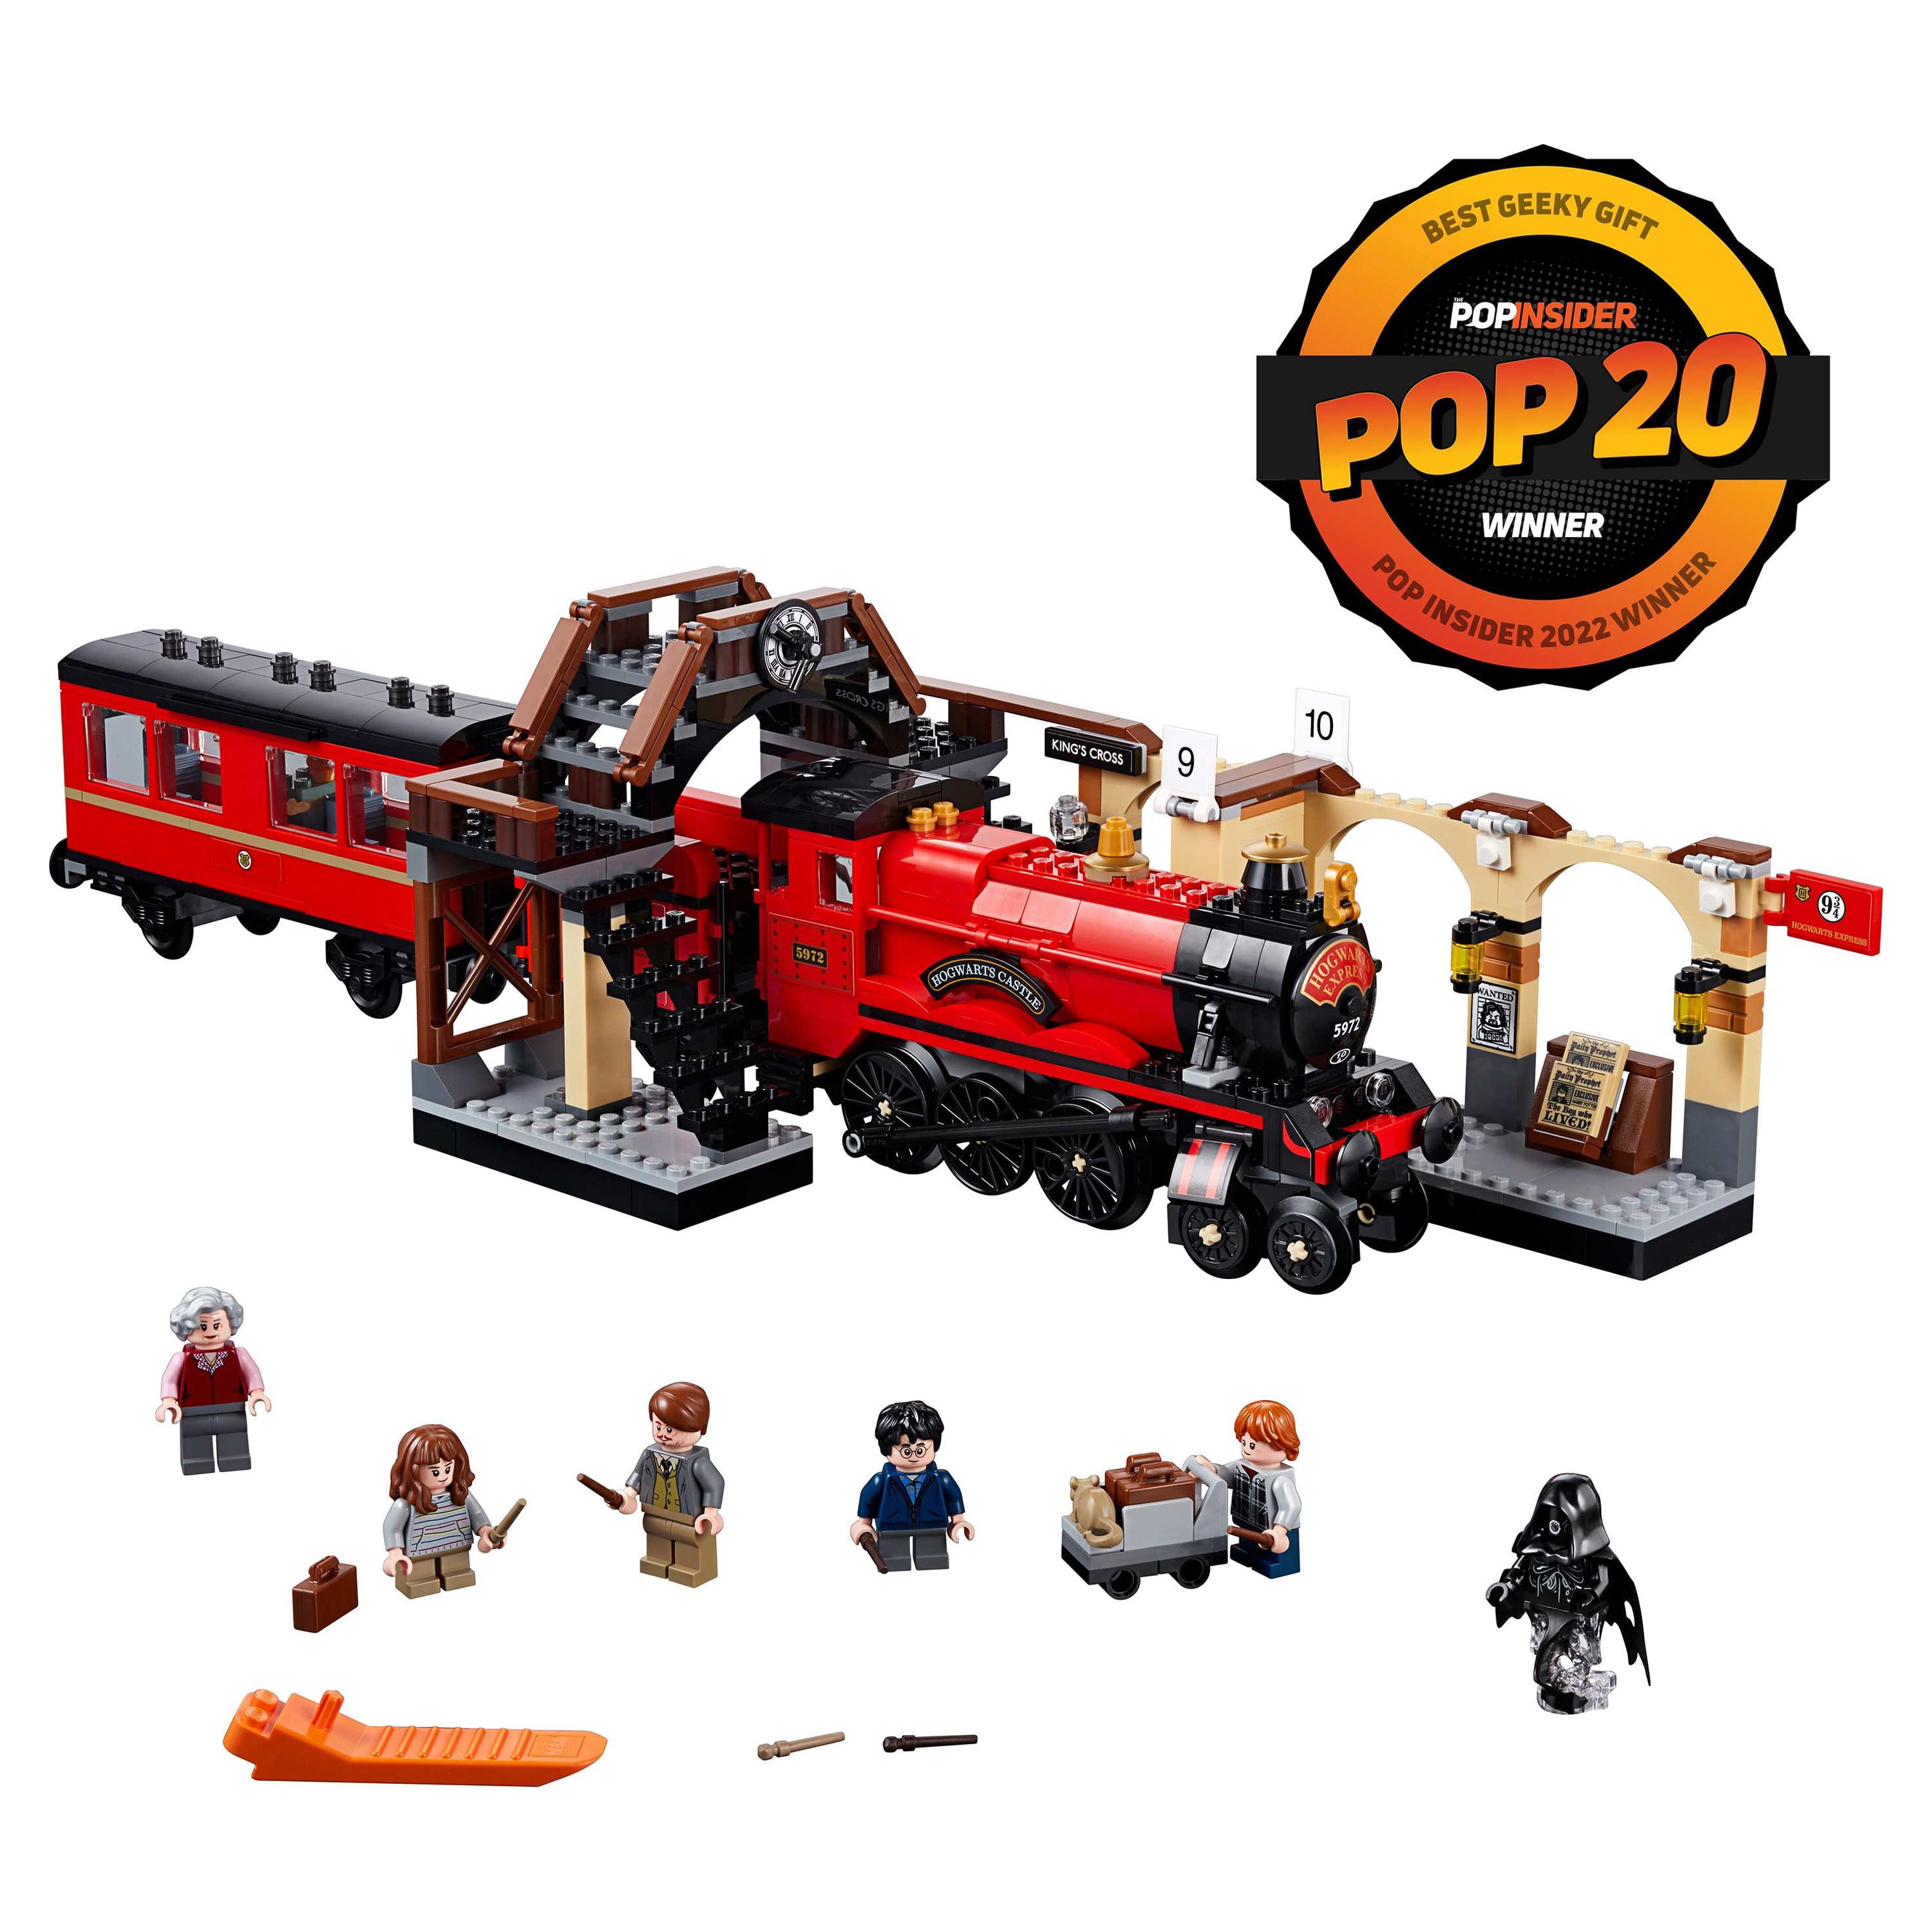 LEGO Harry Potter Hogwarts Express 75955 Toy Model Train Building Set - image 3 of 5